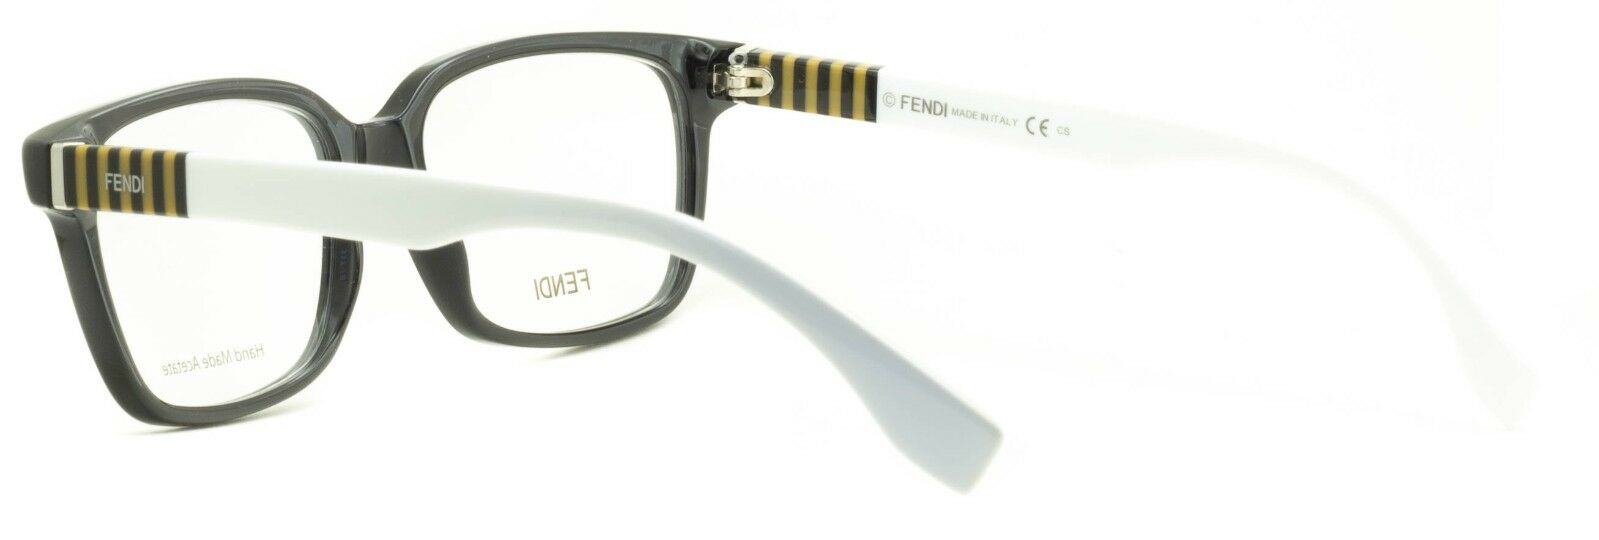 FENDI FF 0056 7TX Eyewear RX Optical FRAMES NEW Glasses Eyeglasses Italy - BNIB